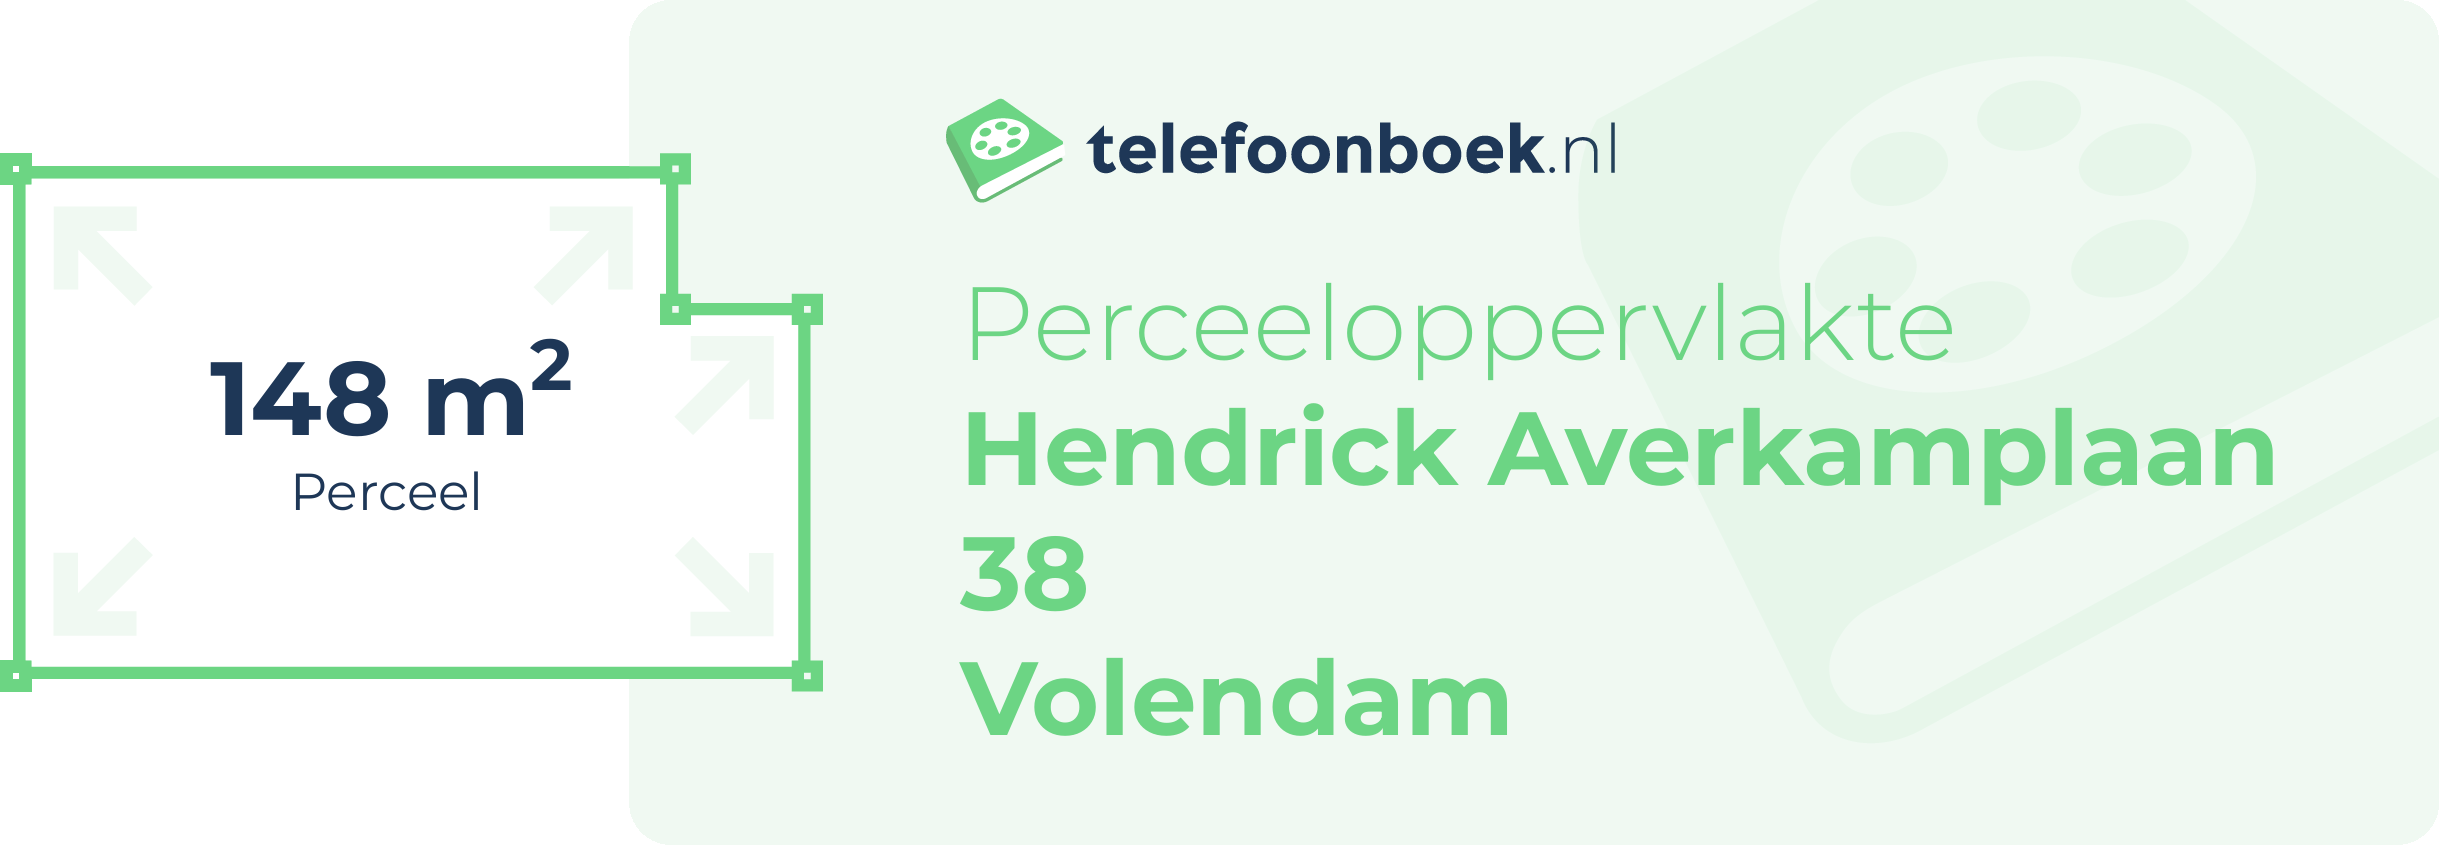 Perceeloppervlakte Hendrick Averkamplaan 38 Volendam